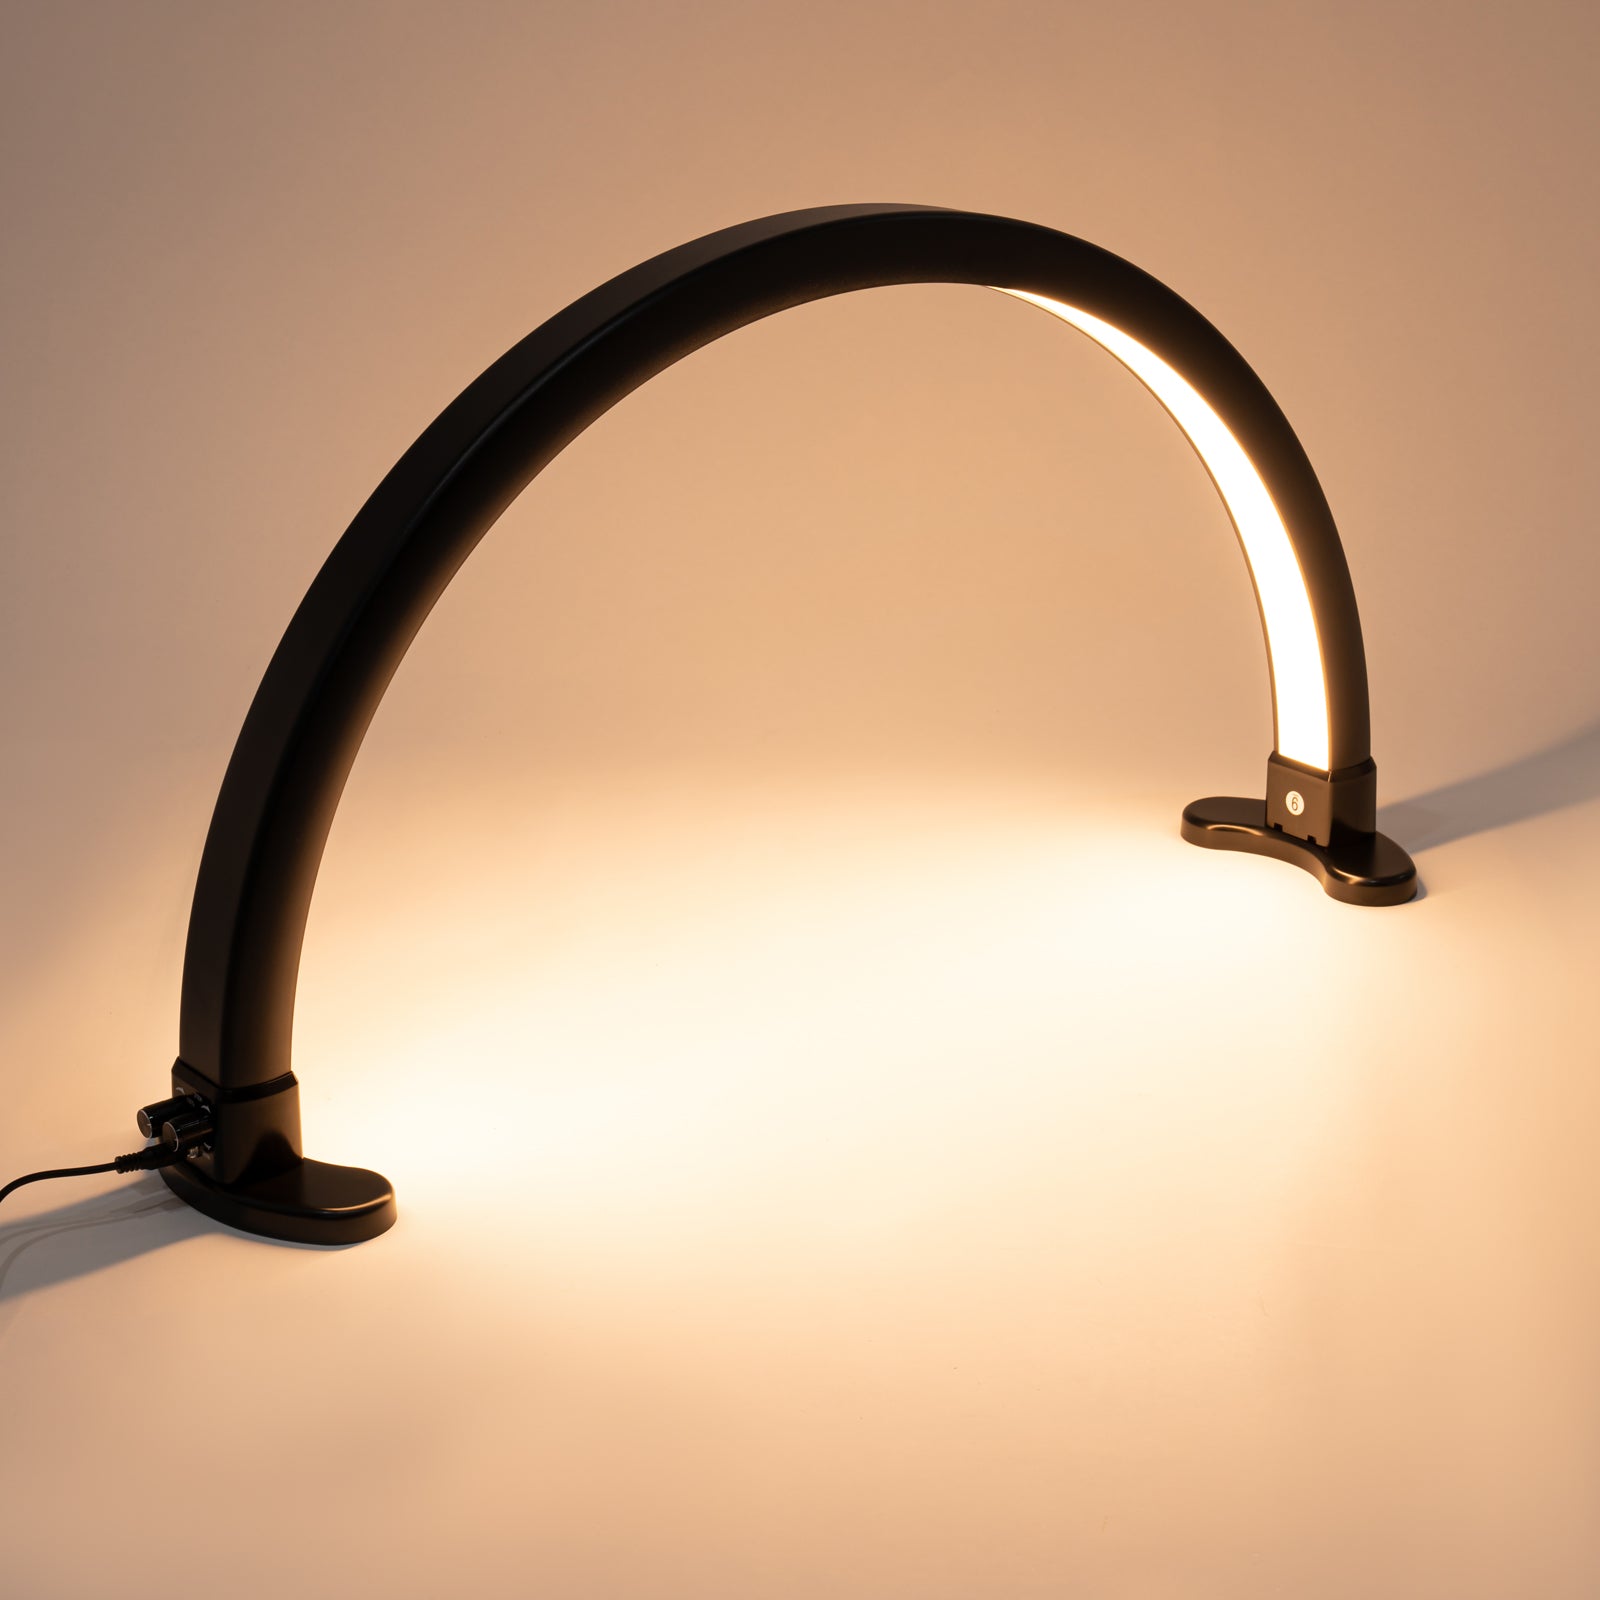 Lampada da scrivania a mezzaluna, 45 W, , luce LED per ciglia, lampada cosmetica a mezzaluna (nero)